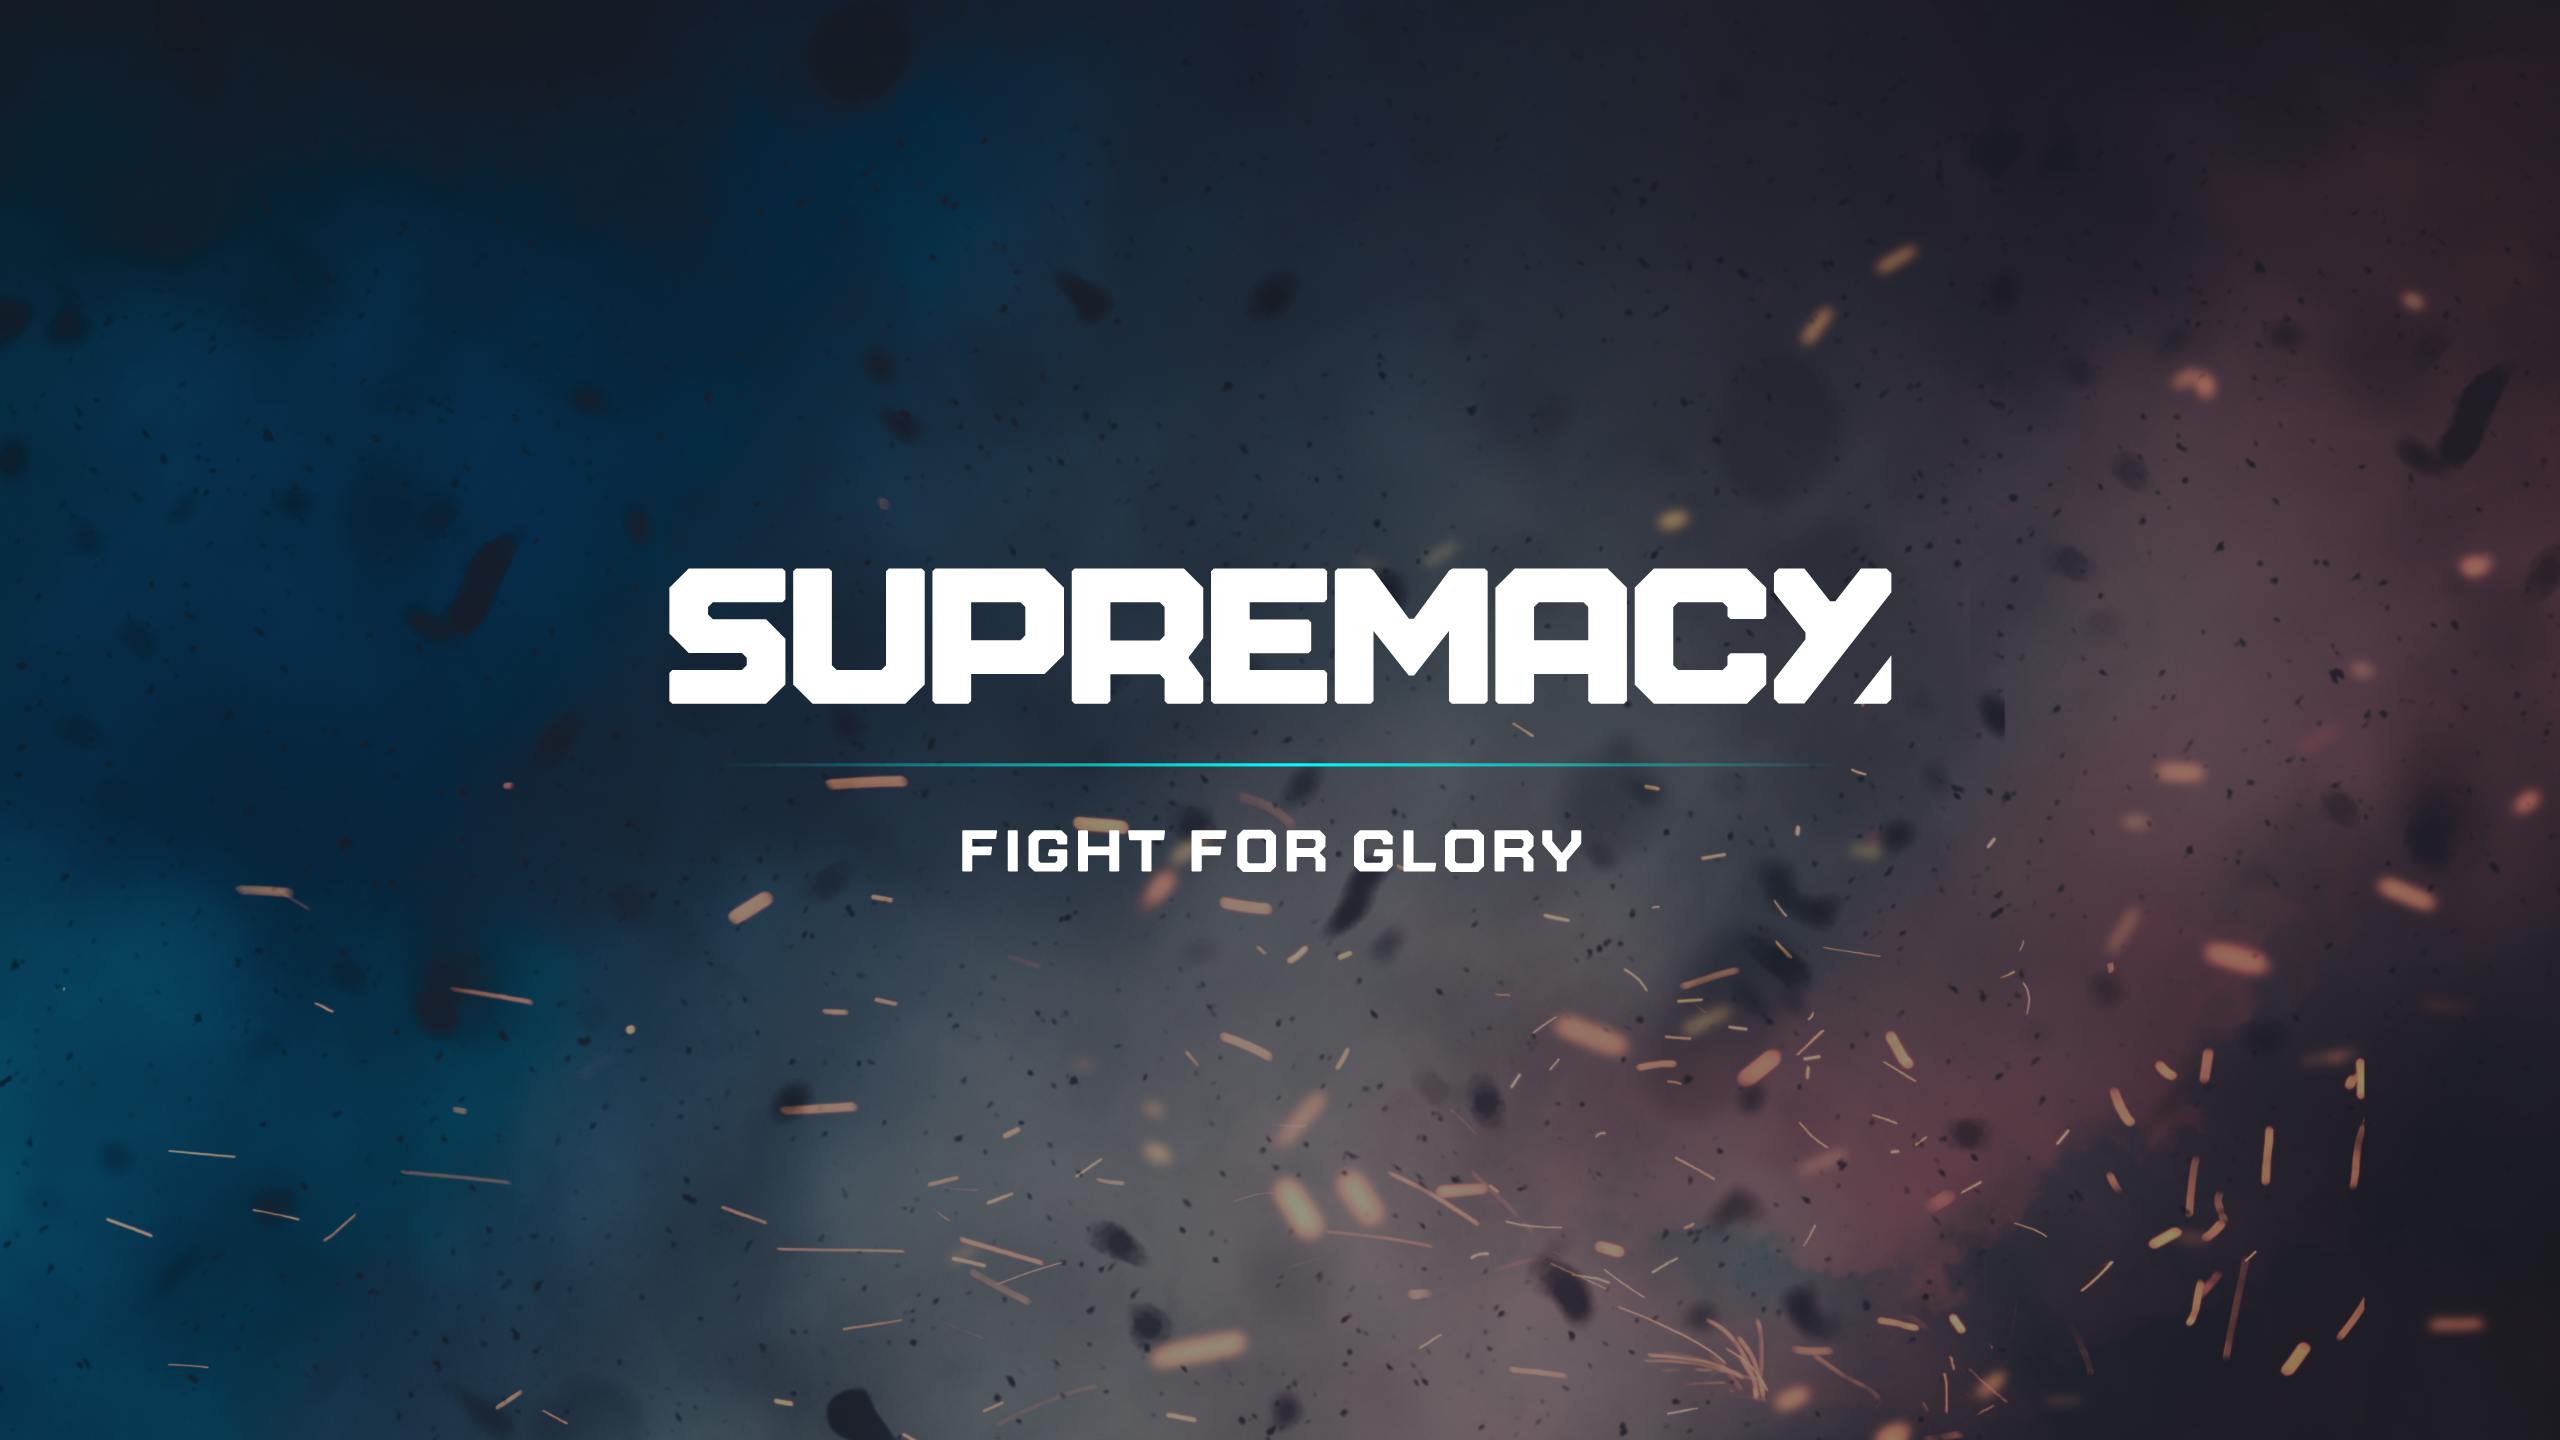 supremacy fight for glory bg